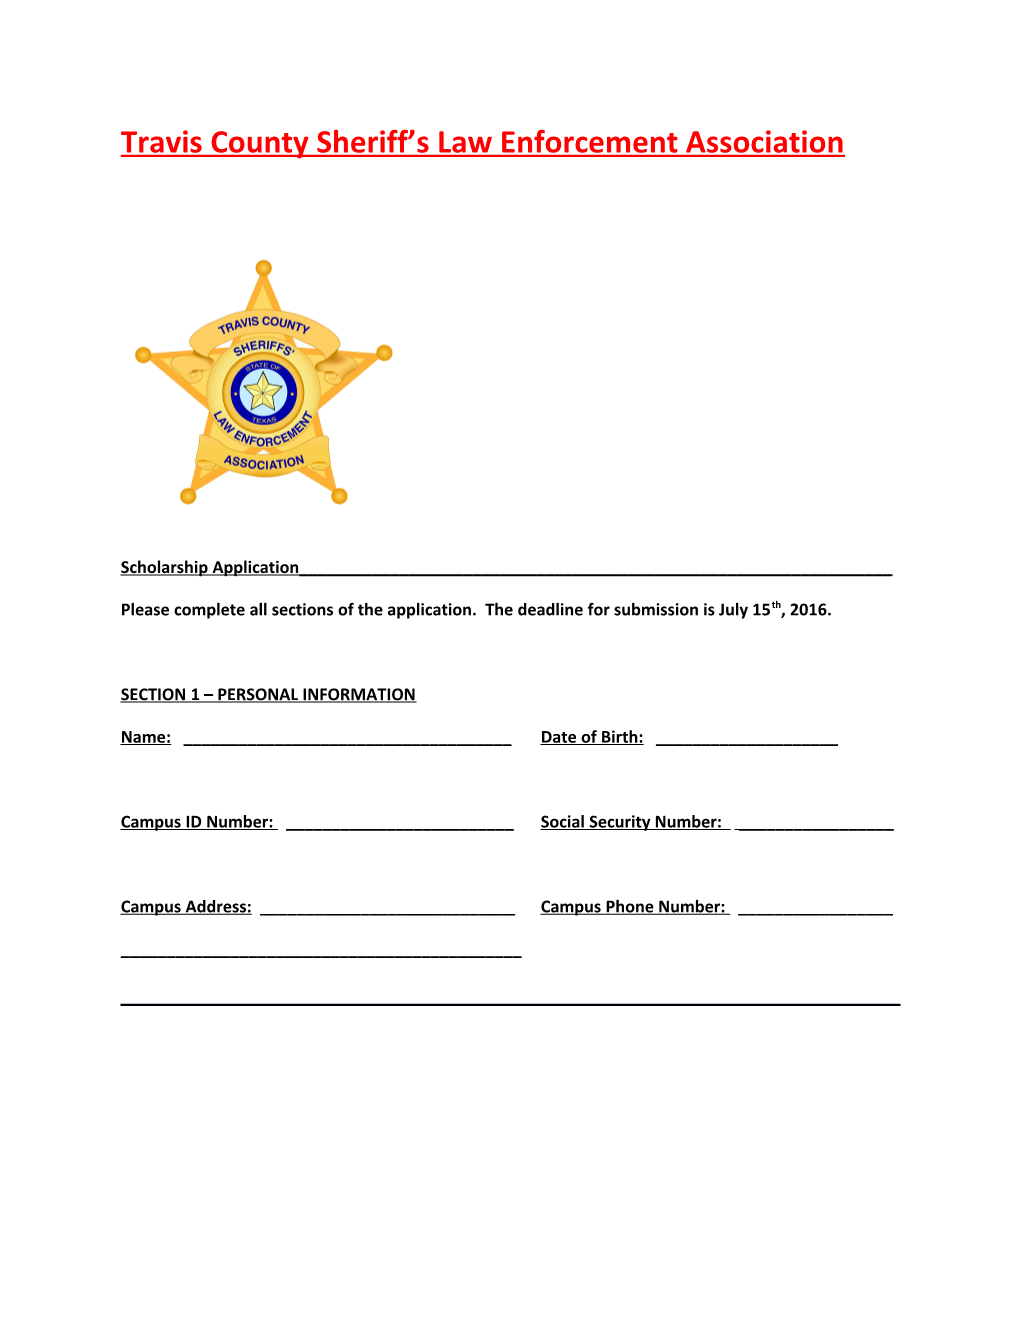 Travis County Sheriff S Law Enforcement Association